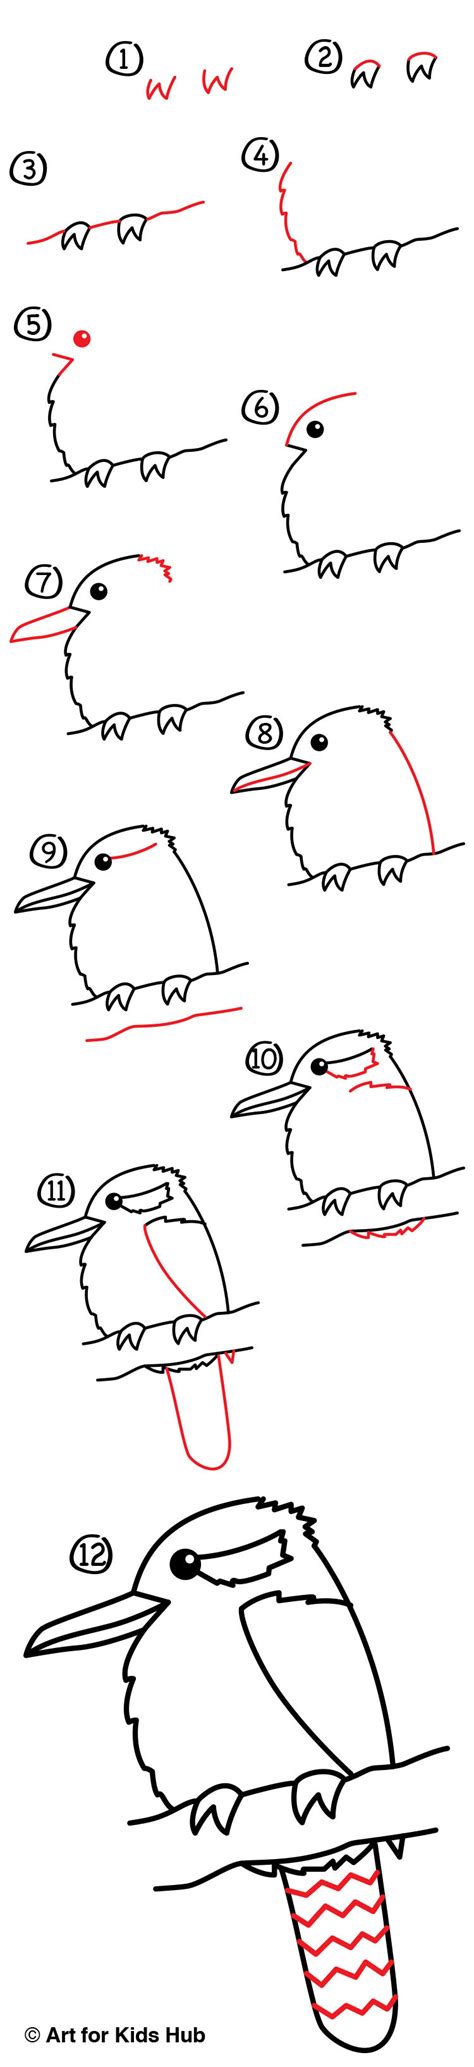 How To Draw A Kookaburra Art For Kids Hub